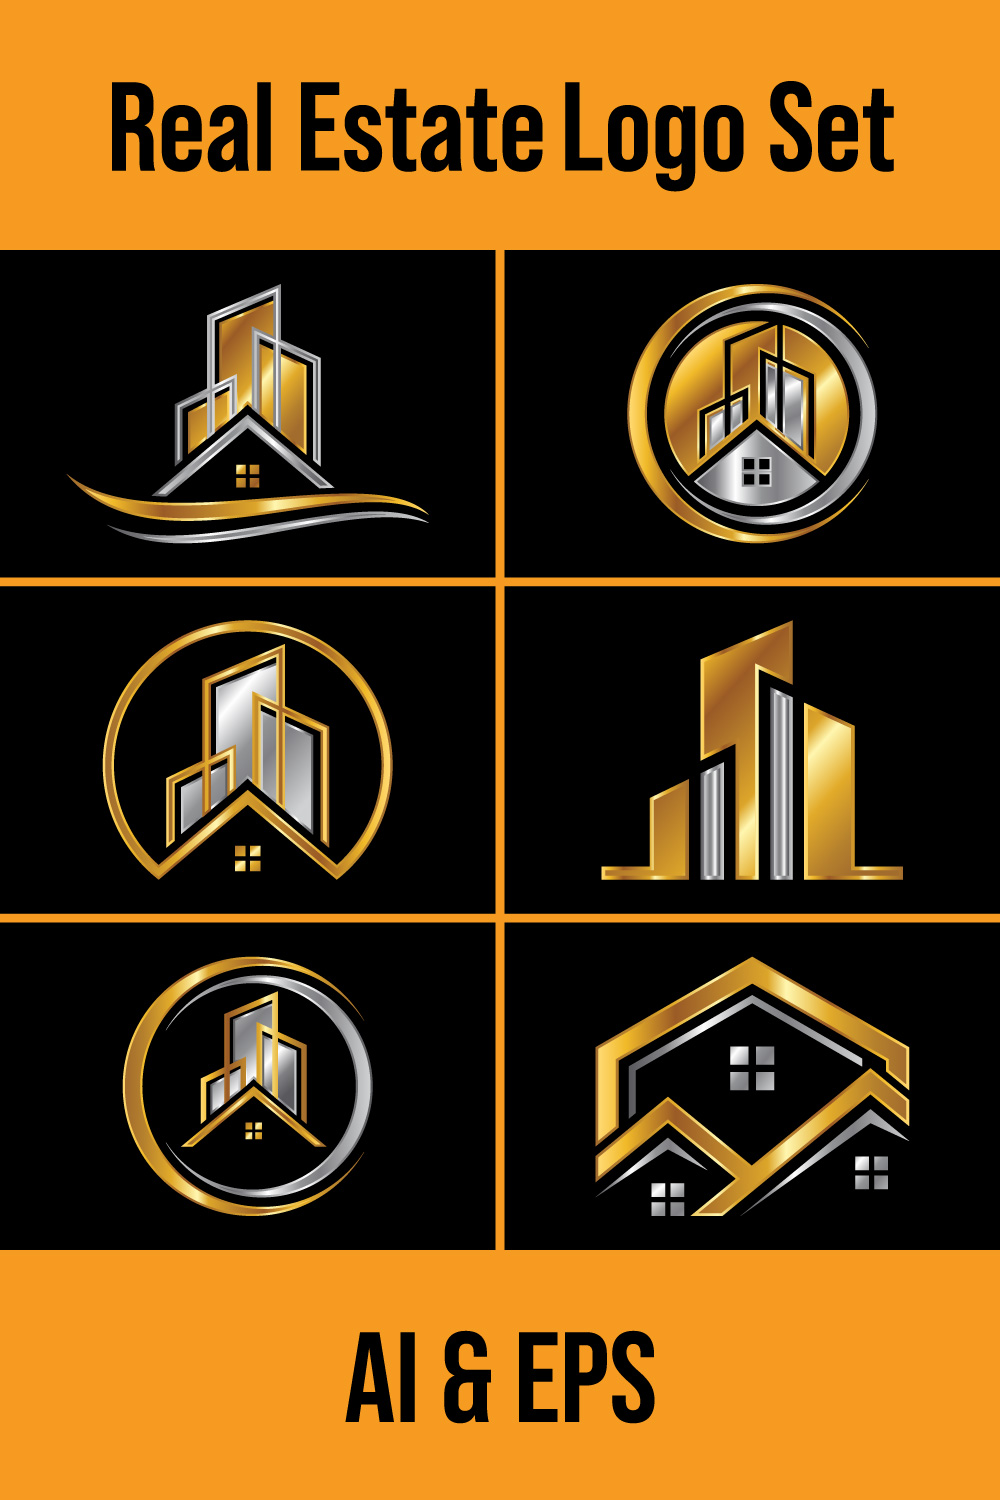 Real estate logo, House logo, Home logo sign symbol pinterest preview image.